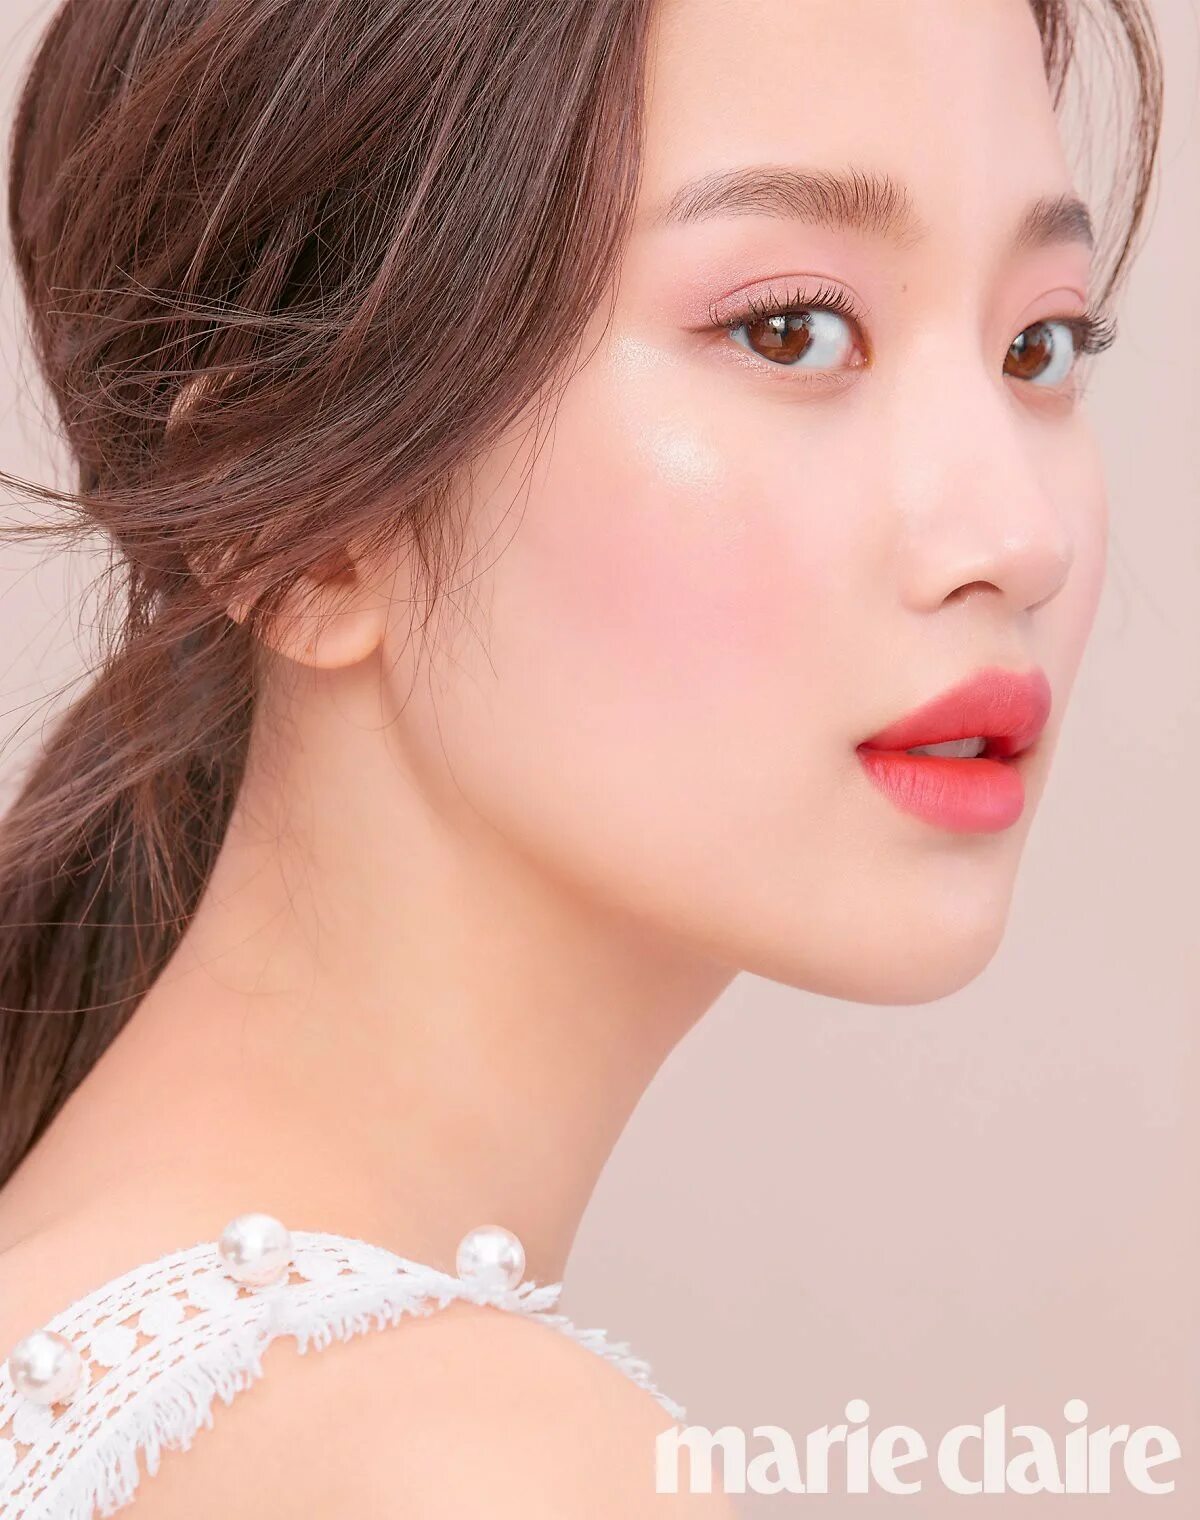 Корейский мун. Мун га ён. Мун га ён корейская актриса. Мун га ён макияж. Мун га ён фотосессии.